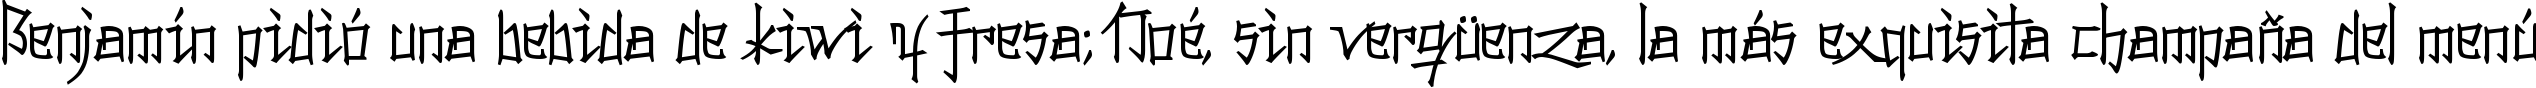 Пример написания шрифтом Konfuciuz текста на испанском